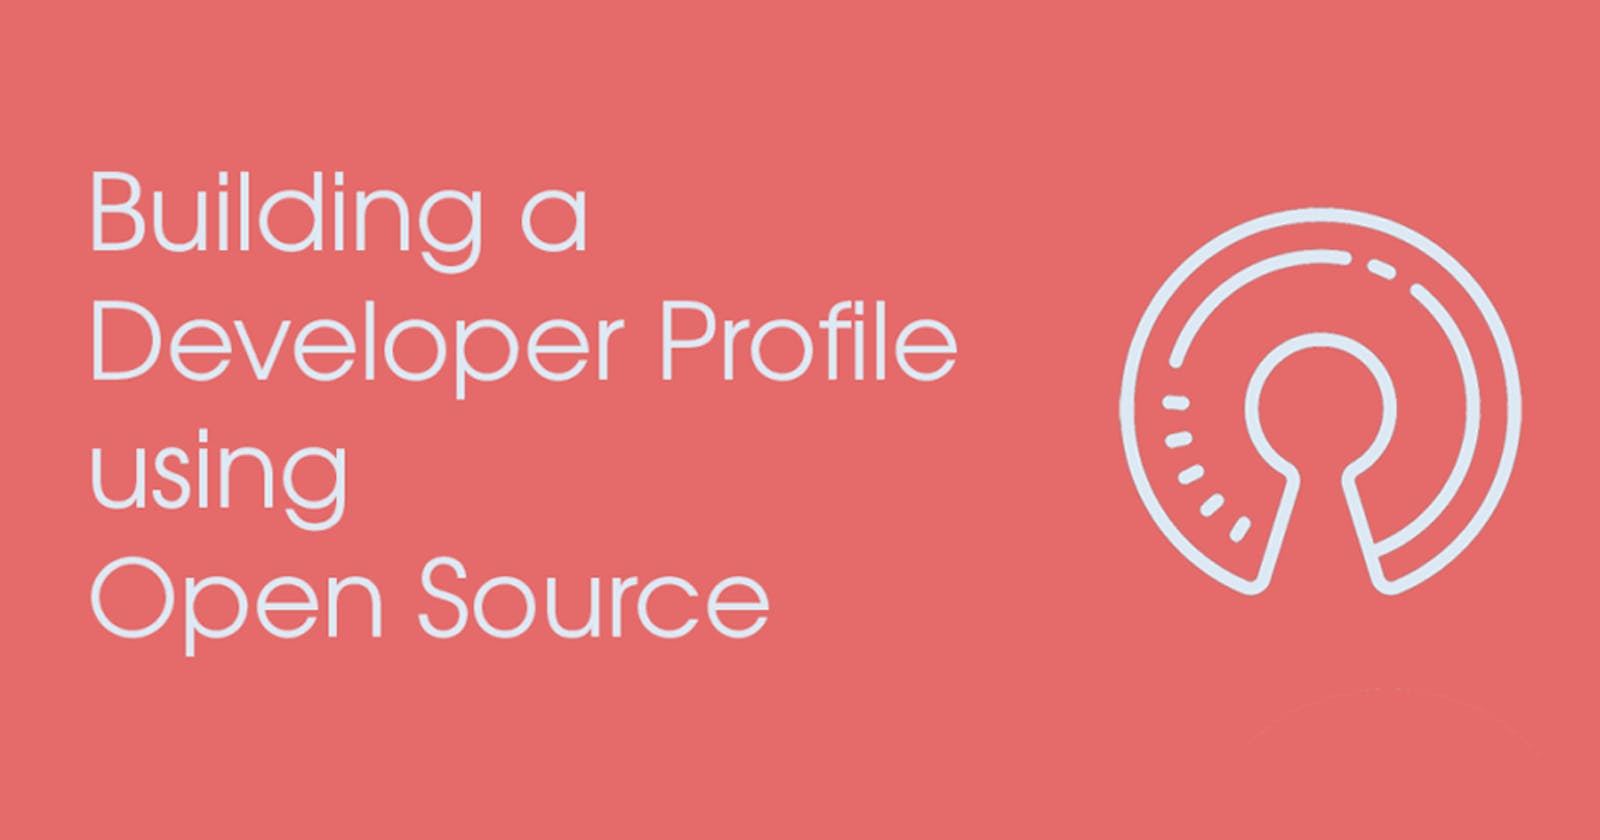 Building a Developer Profile using Open Source